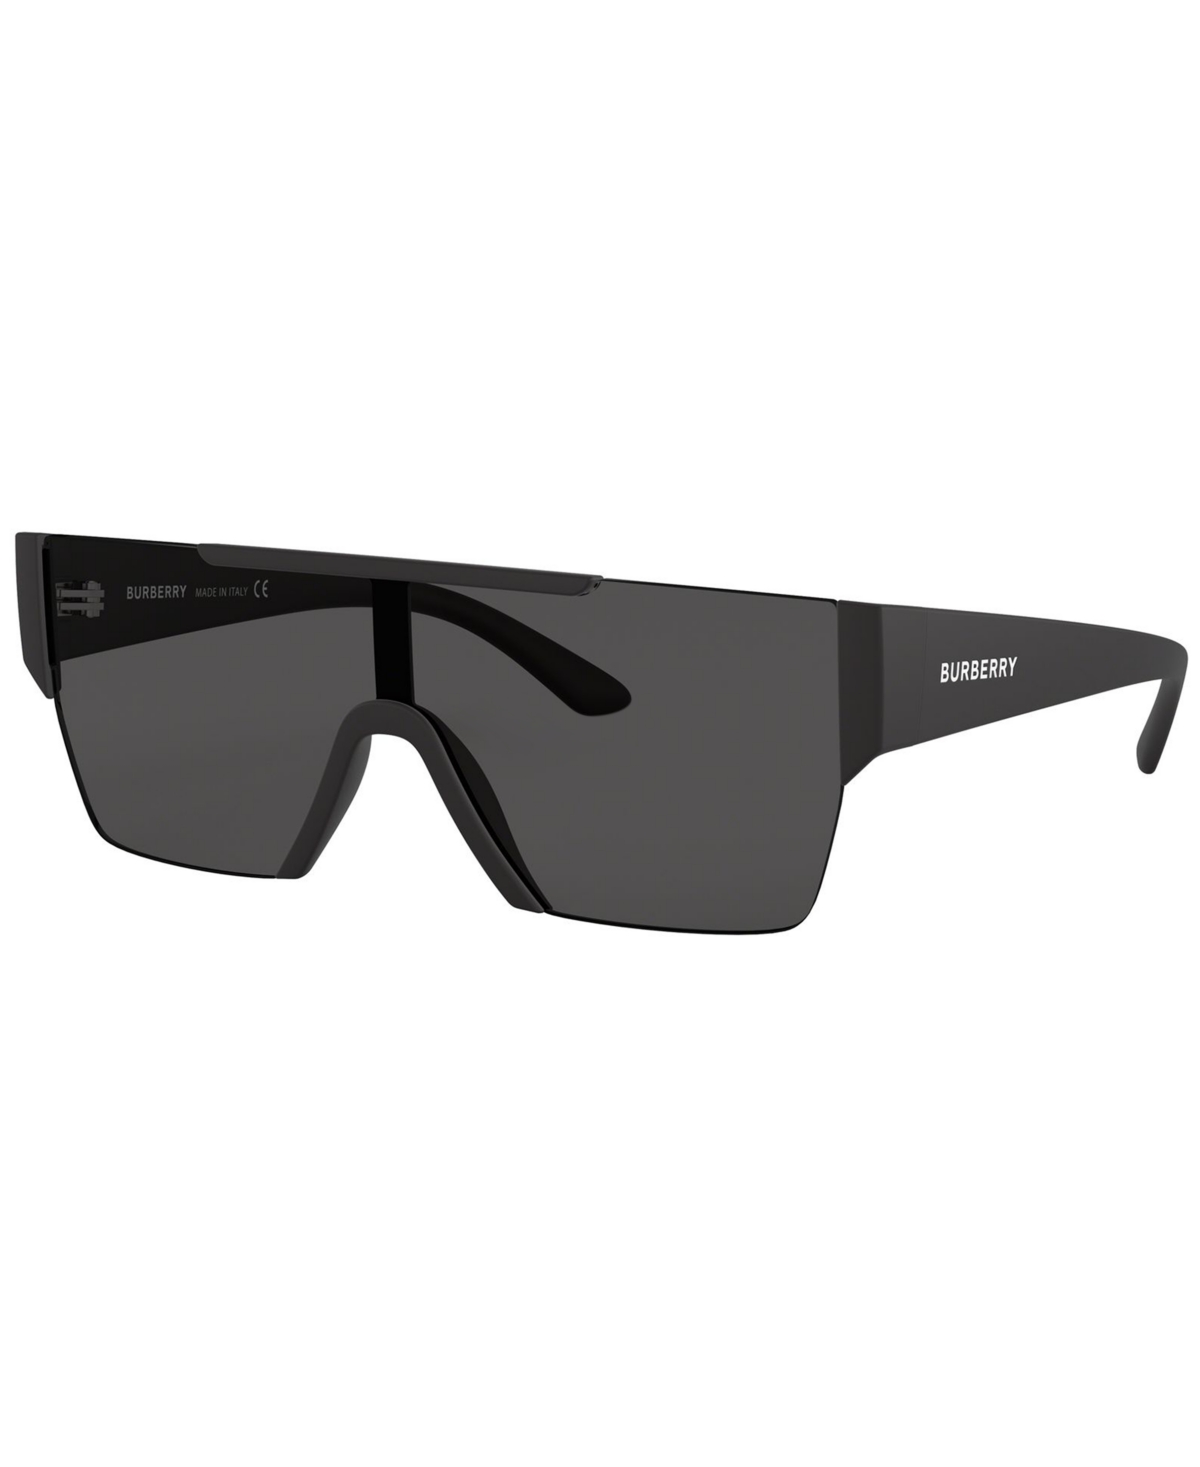 Burberry Men's Sunglasses, Be4291 In Black / Dark / Grey